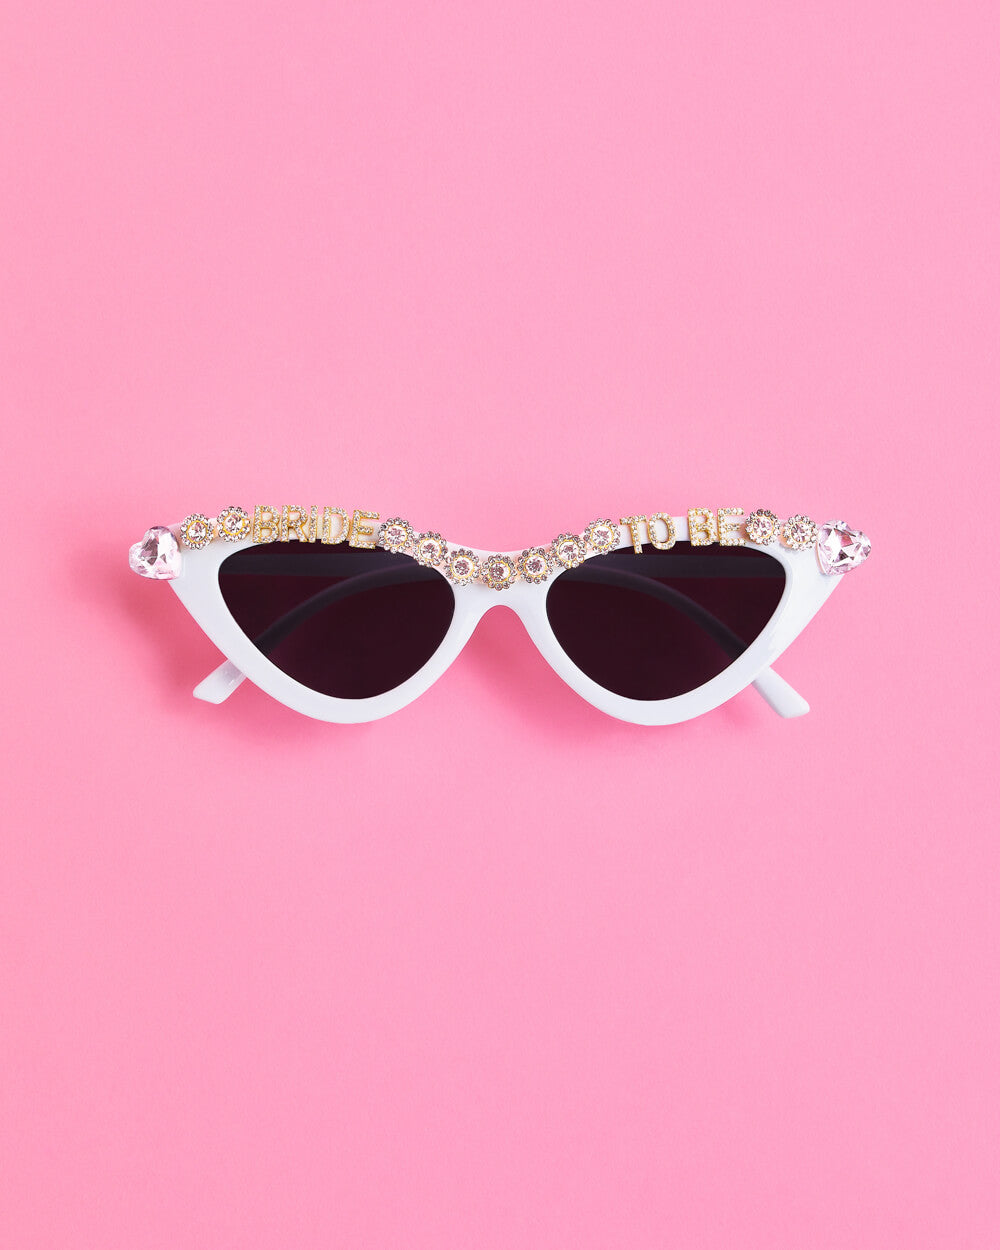 That Bride Sunnies - cat eye sunglasses